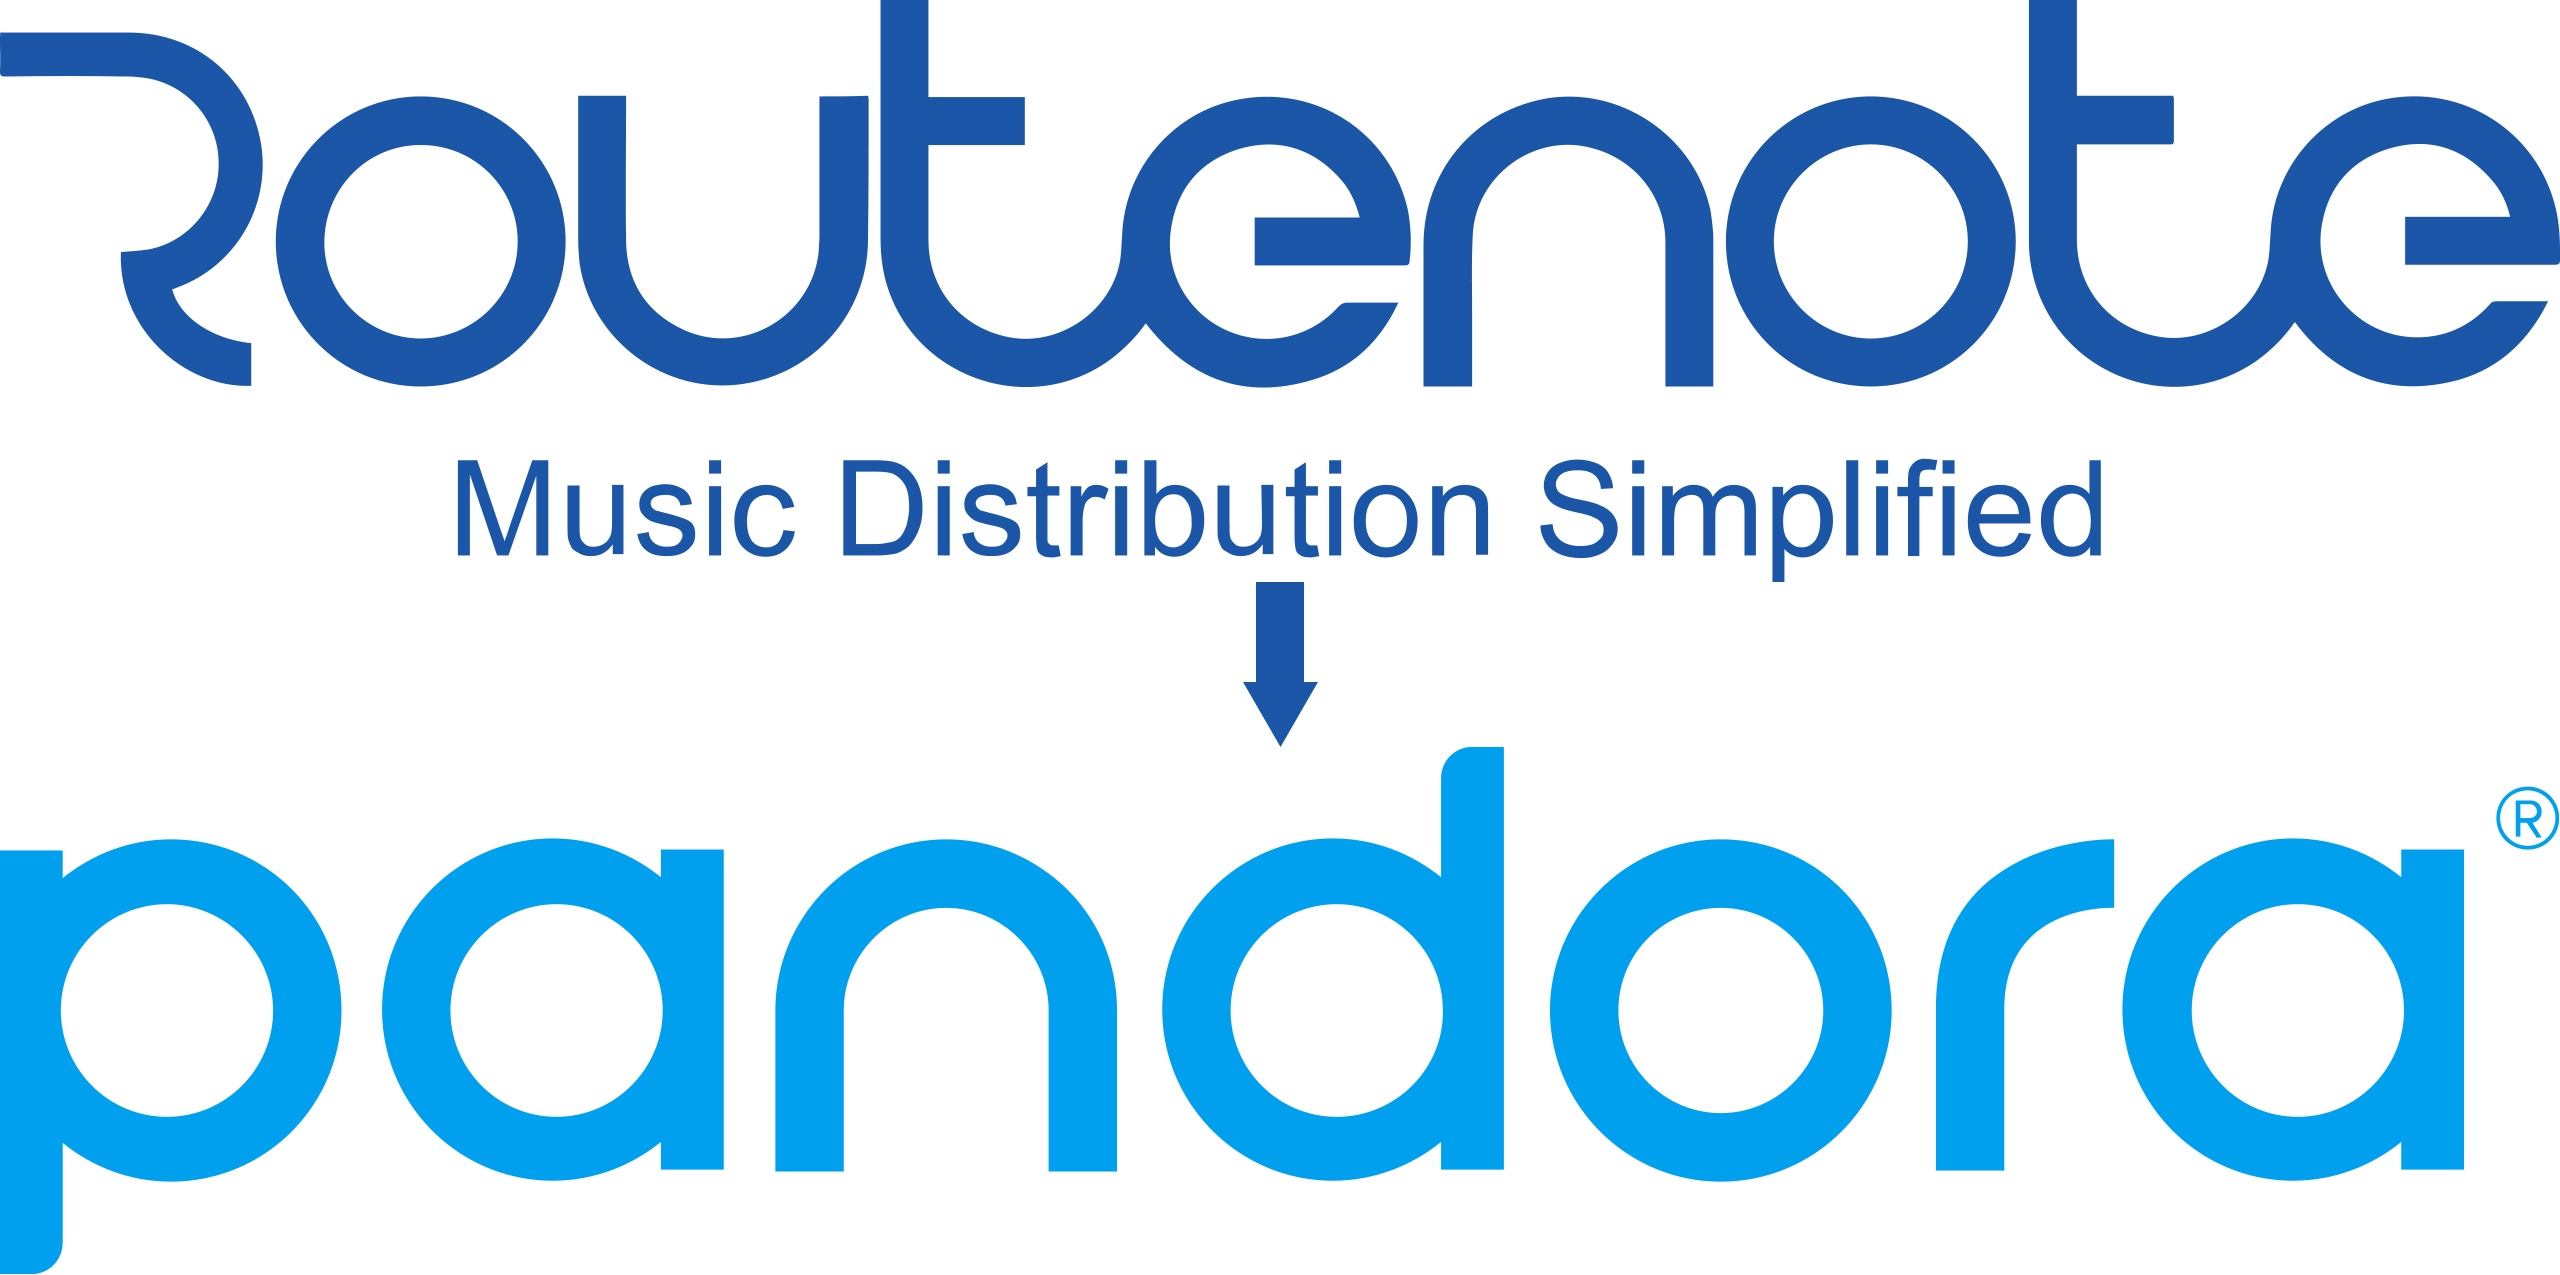 Does UnitedMasters distribute to Pandora?